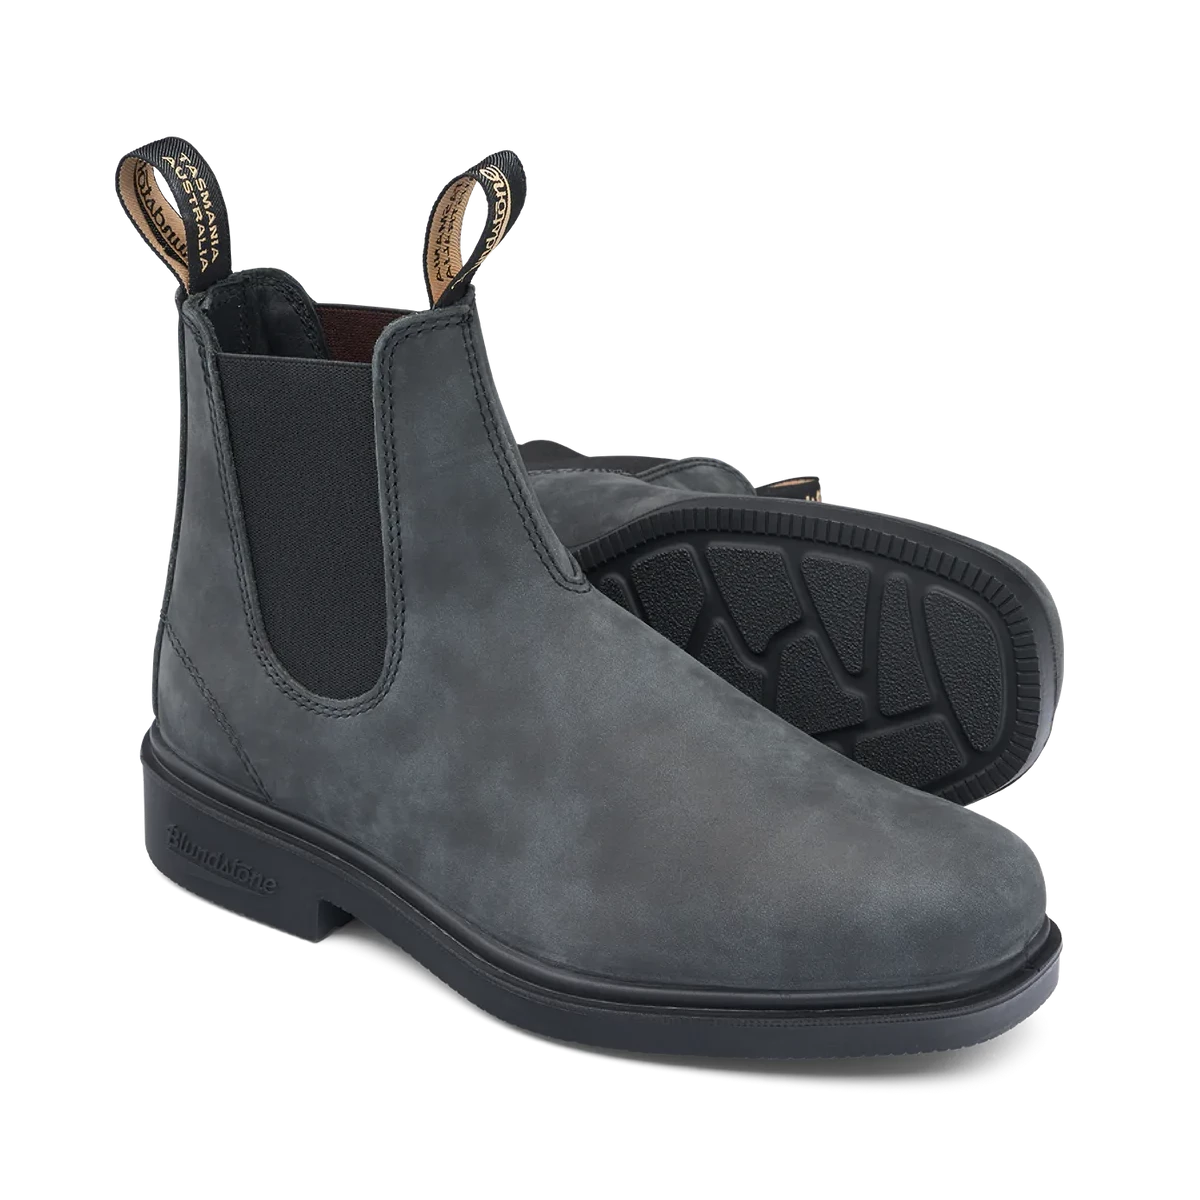 blundstone chisel toe dress boot 1308 rustic black pair sole